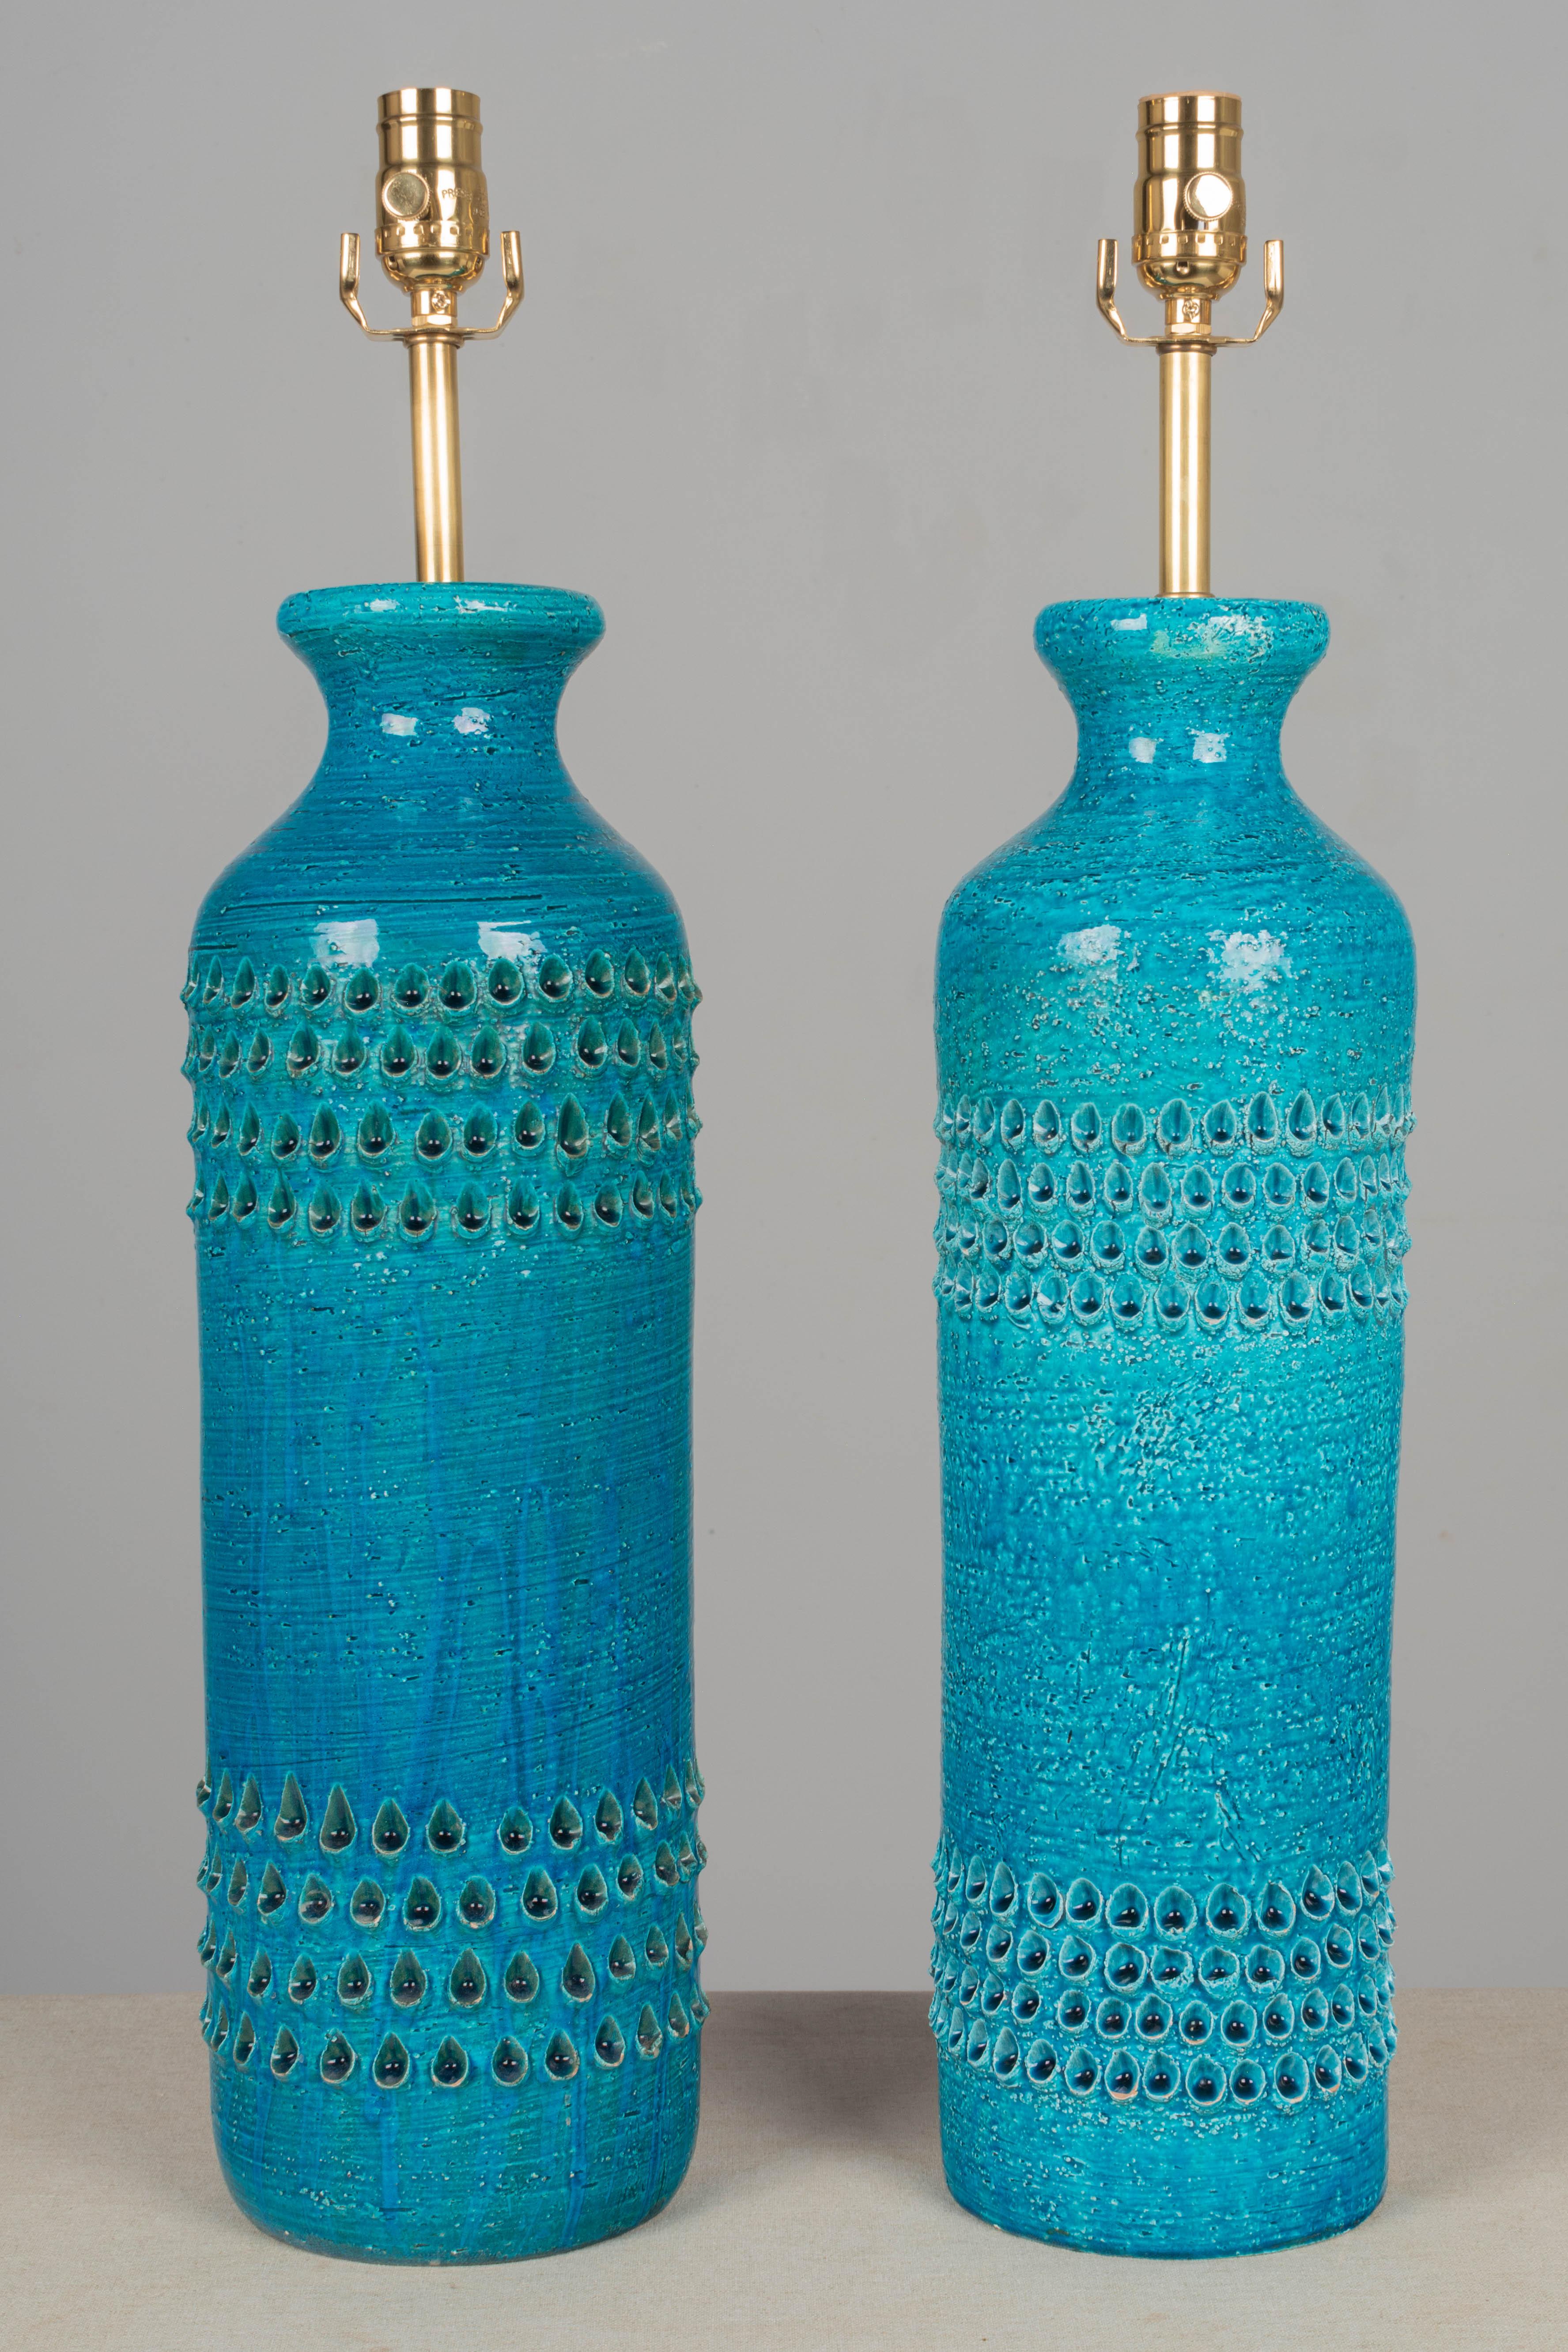 Glazed Bistossi Aldo Londi Pottery Lamps, Pair